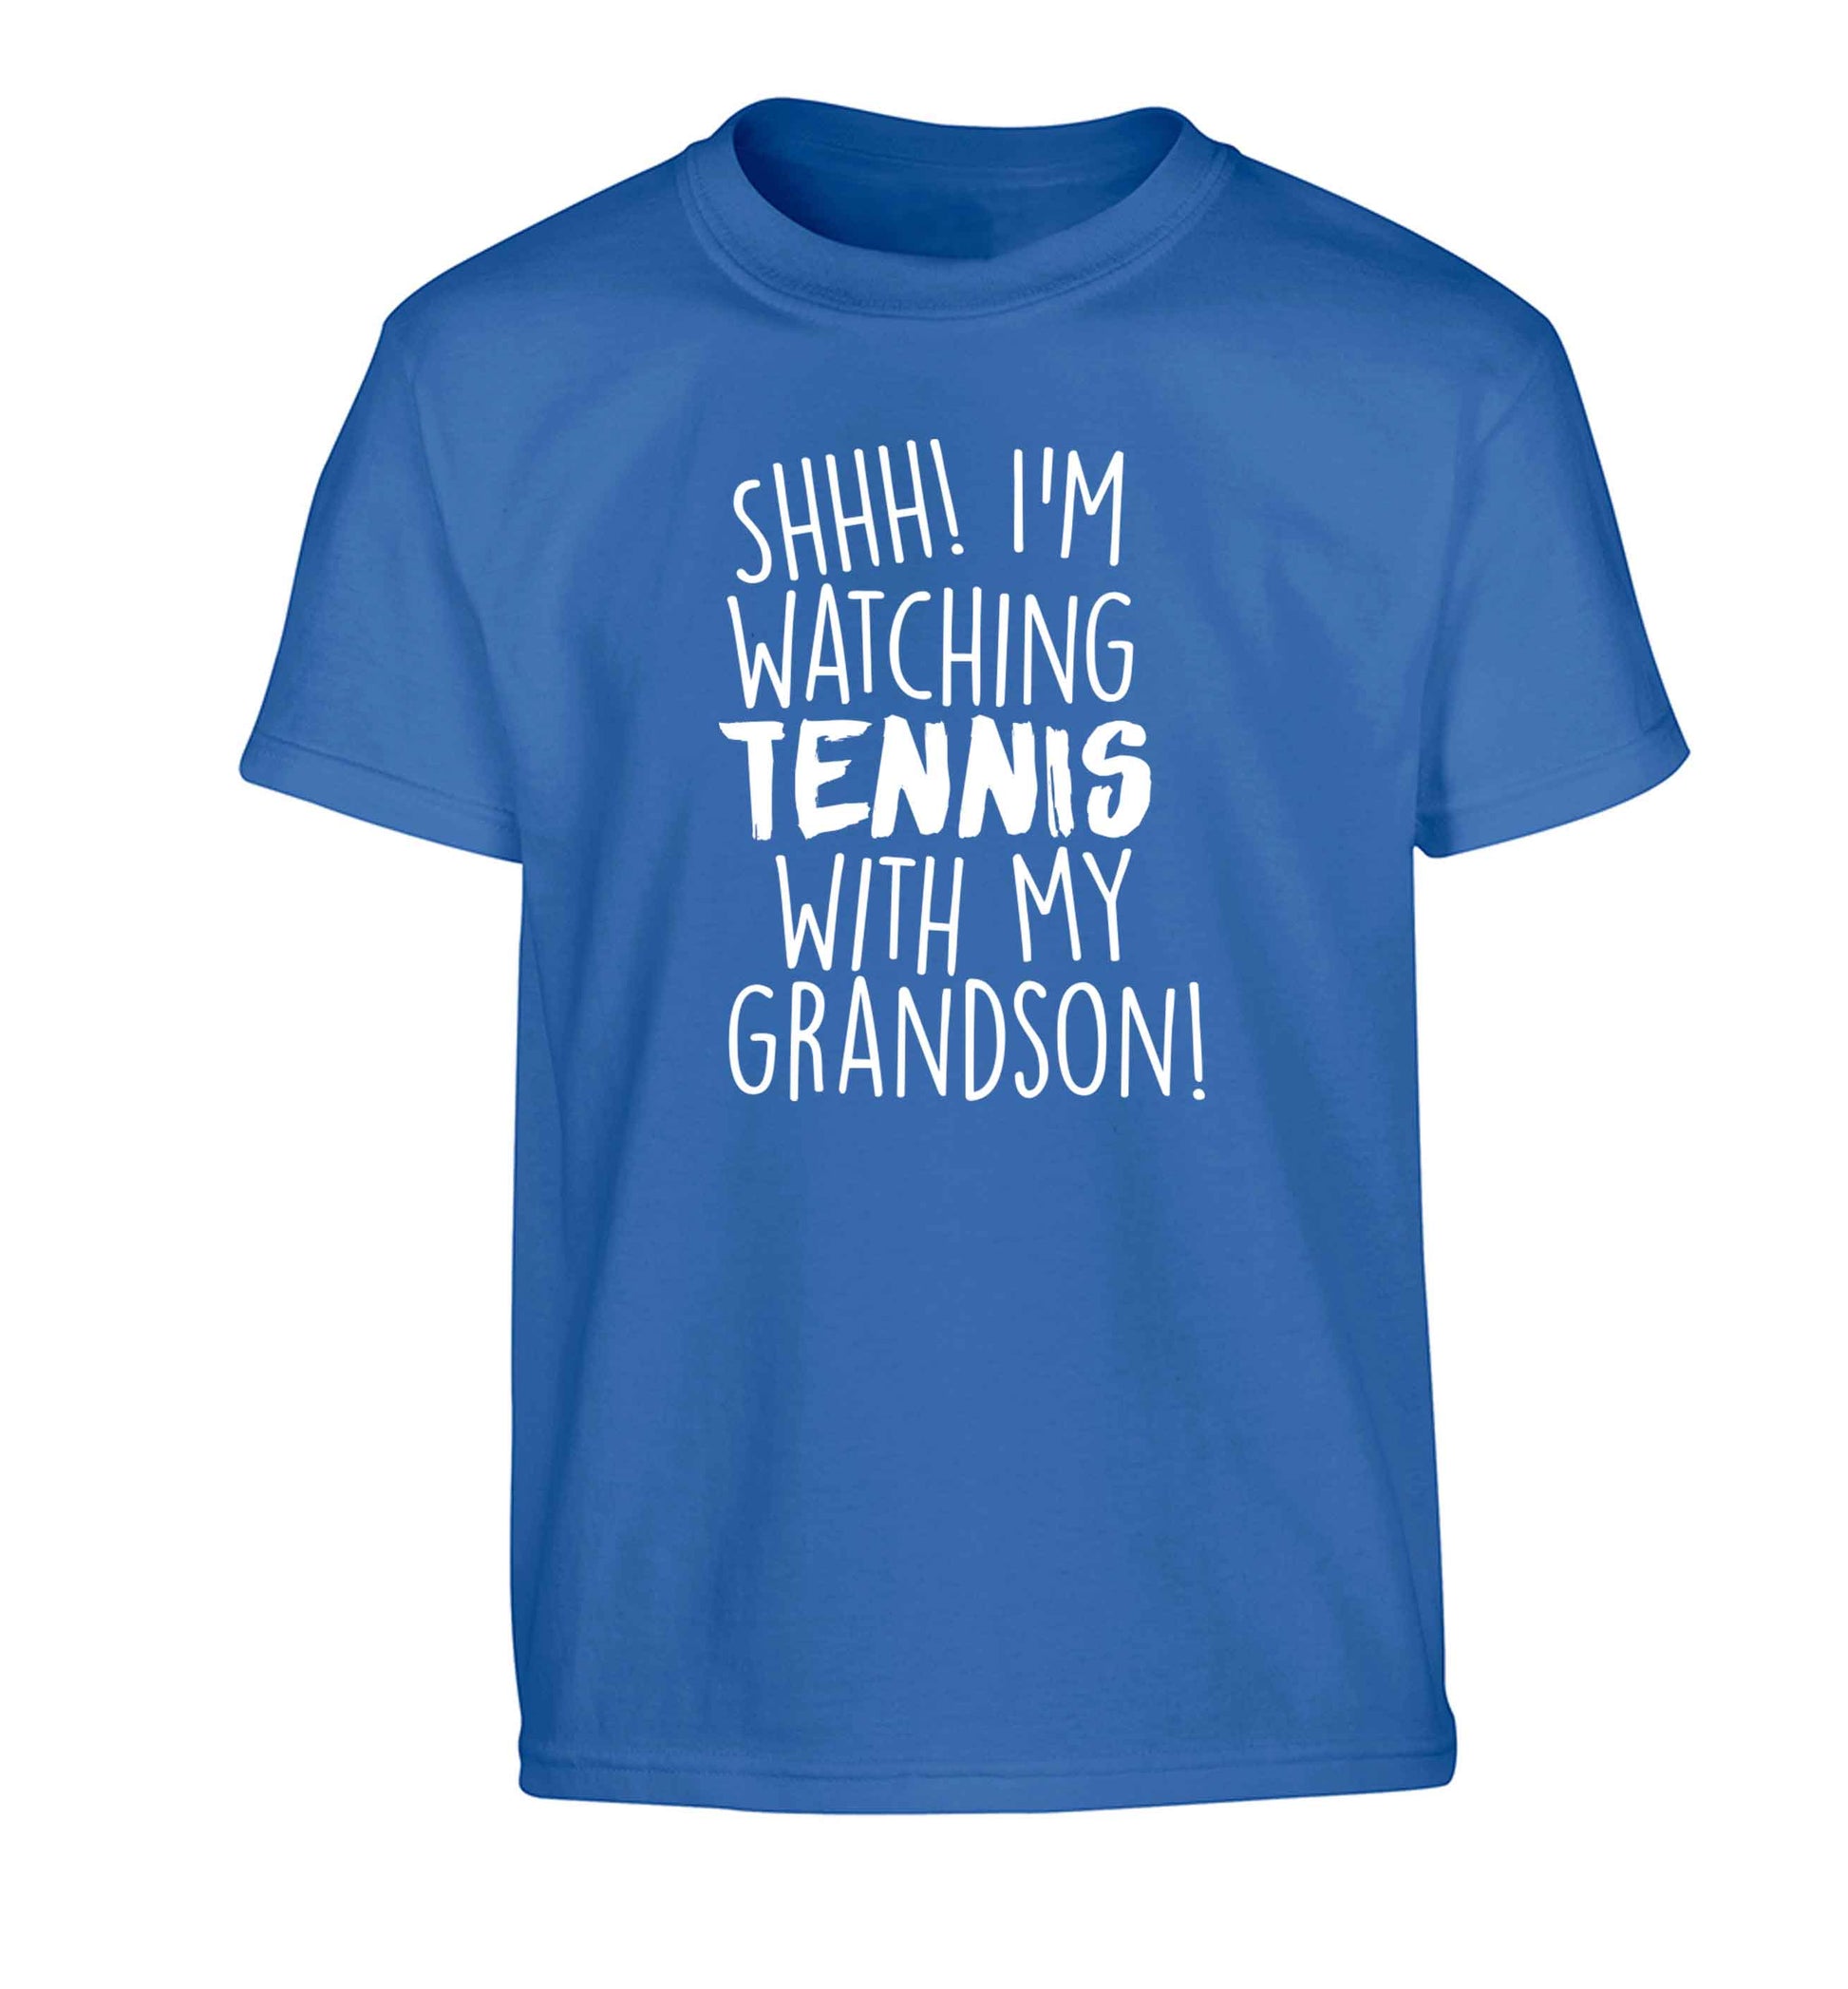 Shh! I'm watching tennis with my grandson! Children's blue Tshirt 12-13 Years